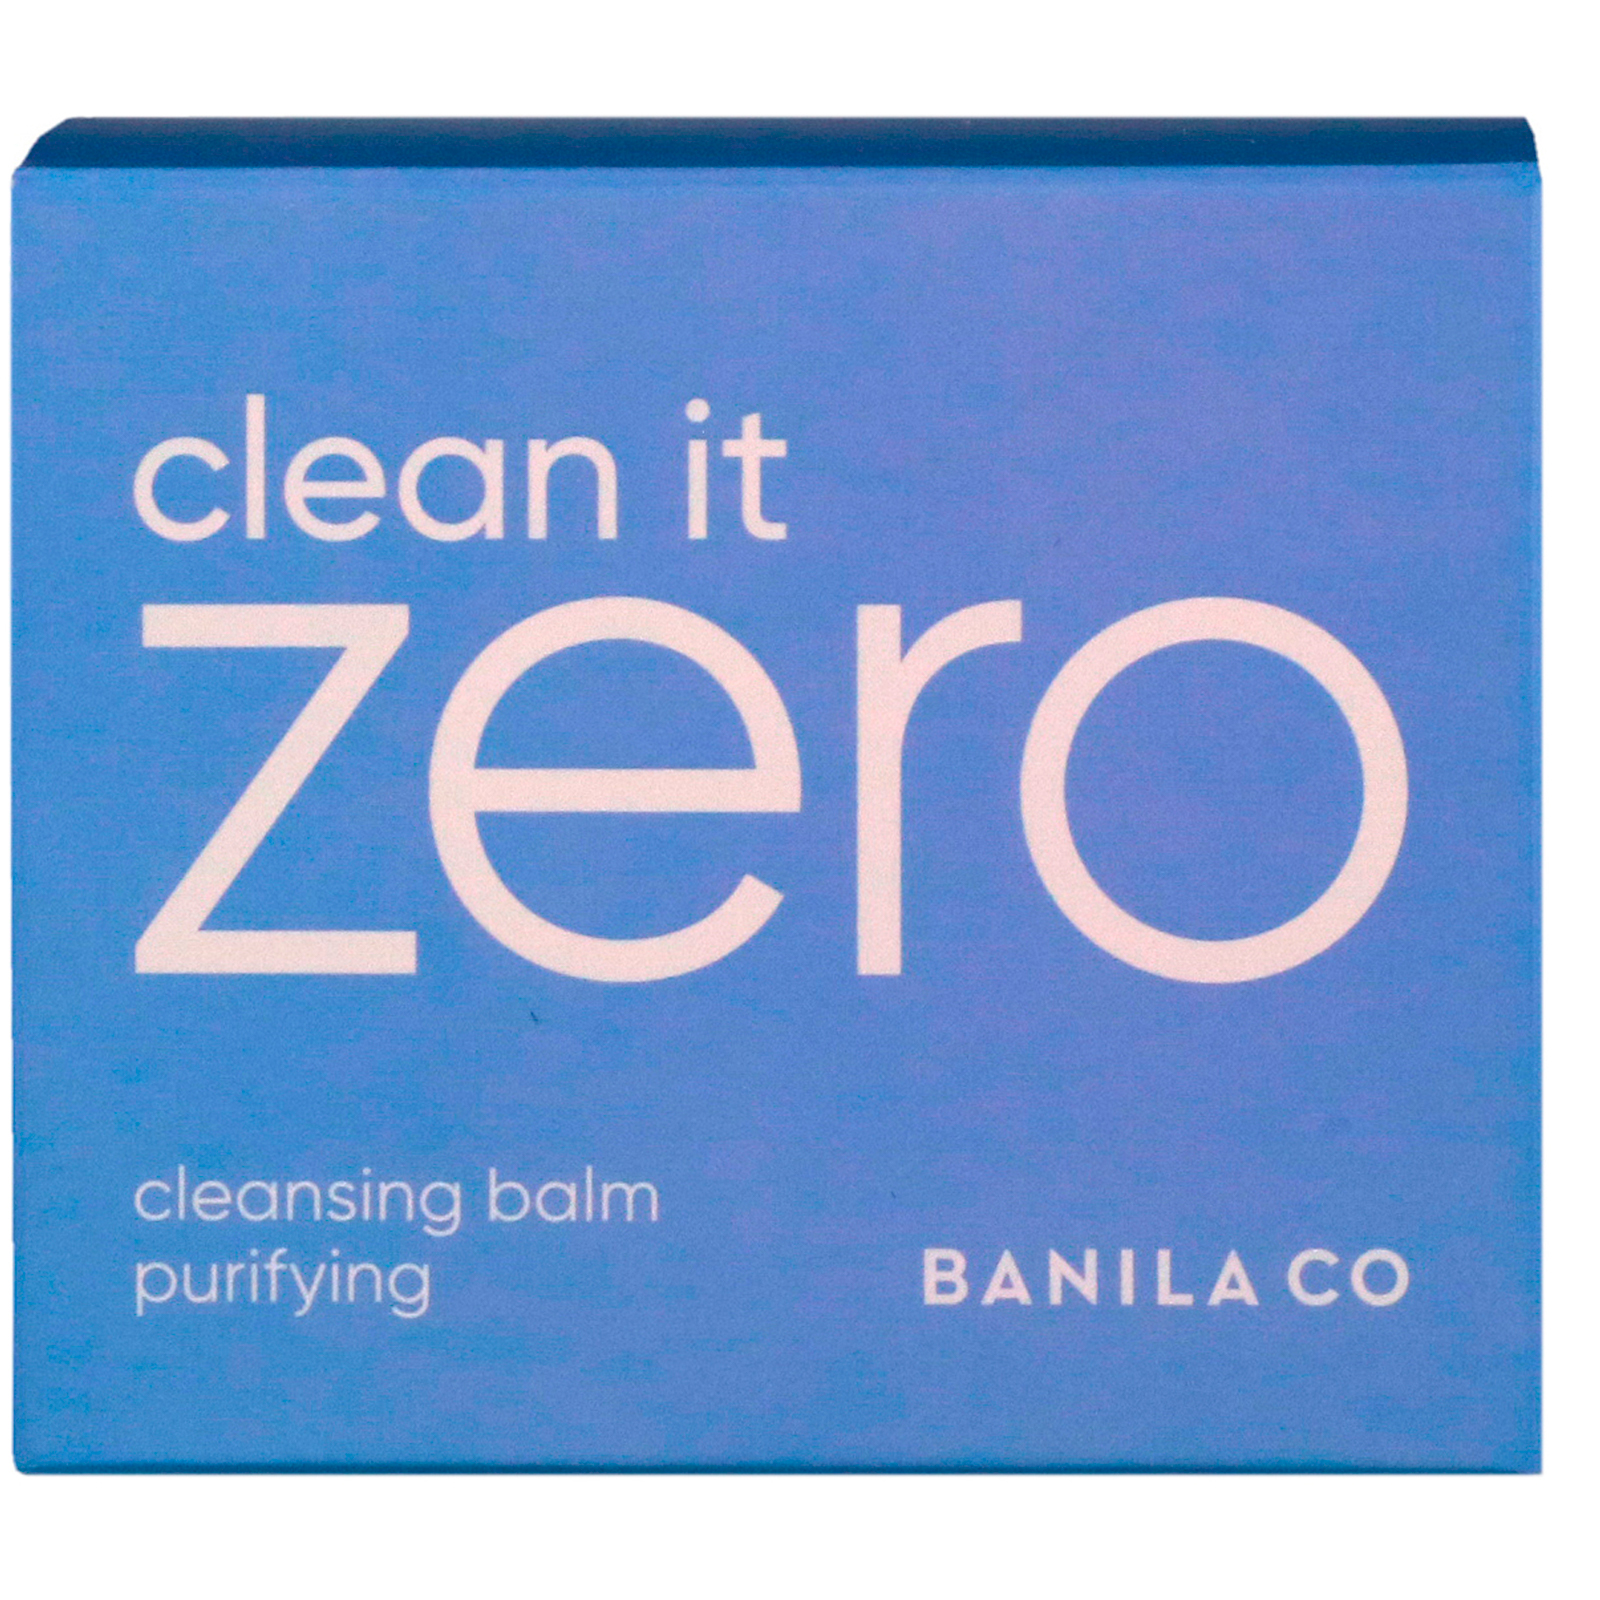 Clean it zero cleansing